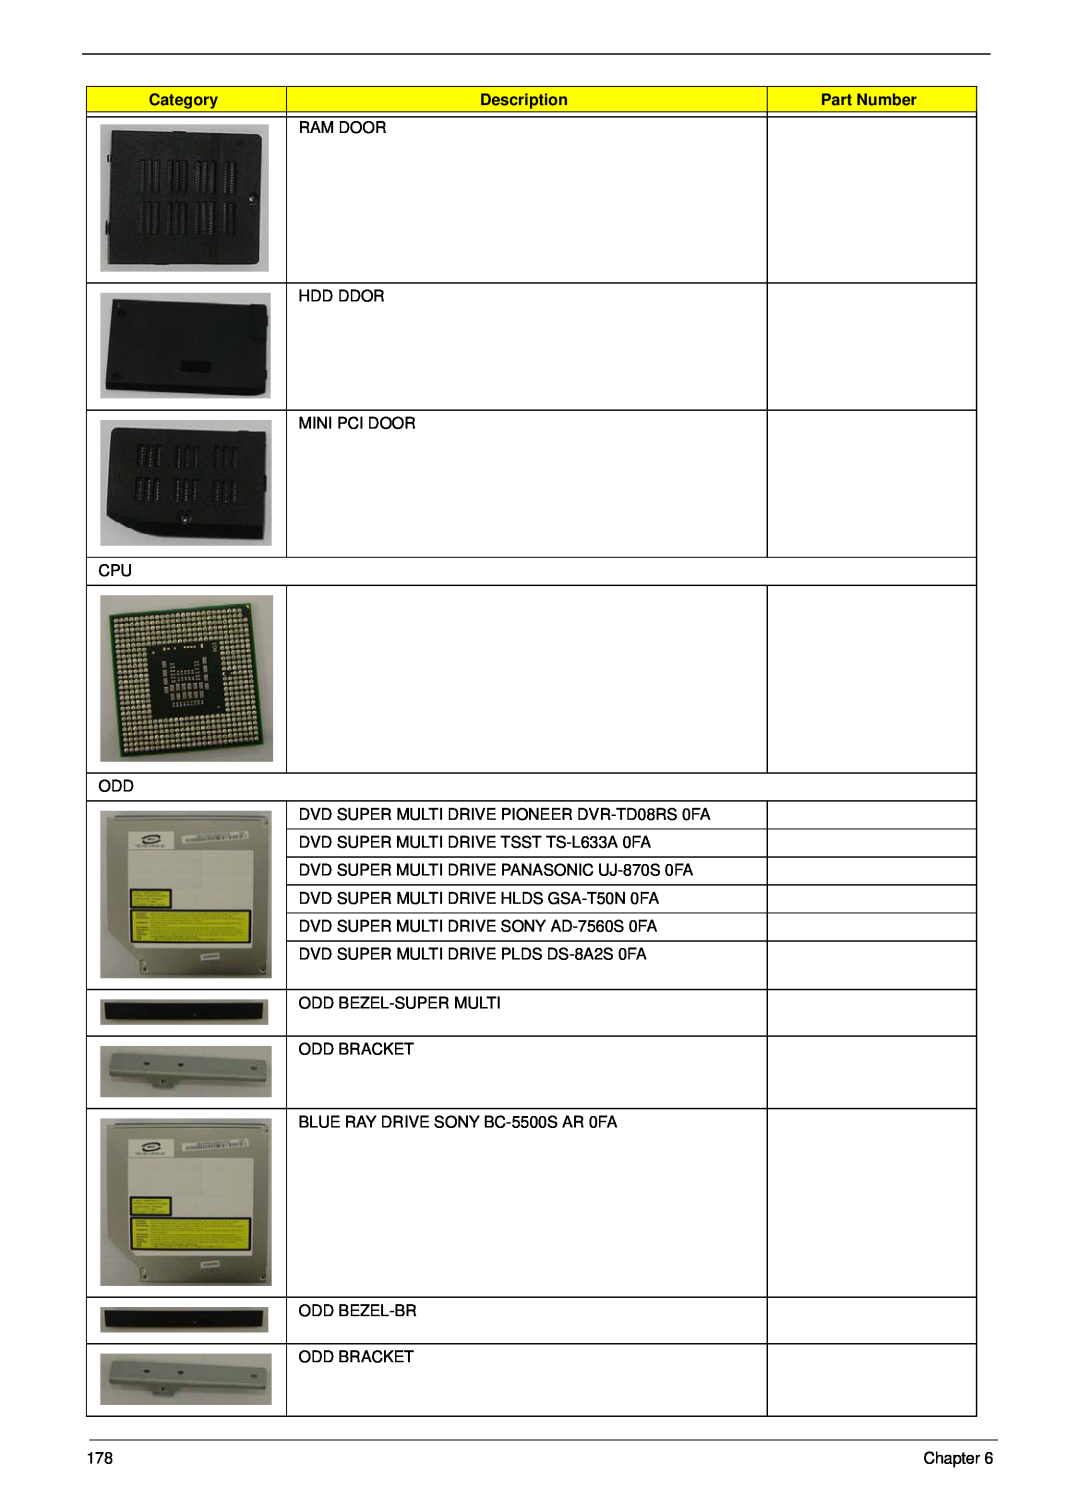 Acer 5530G manual Category, Description, Part Number 